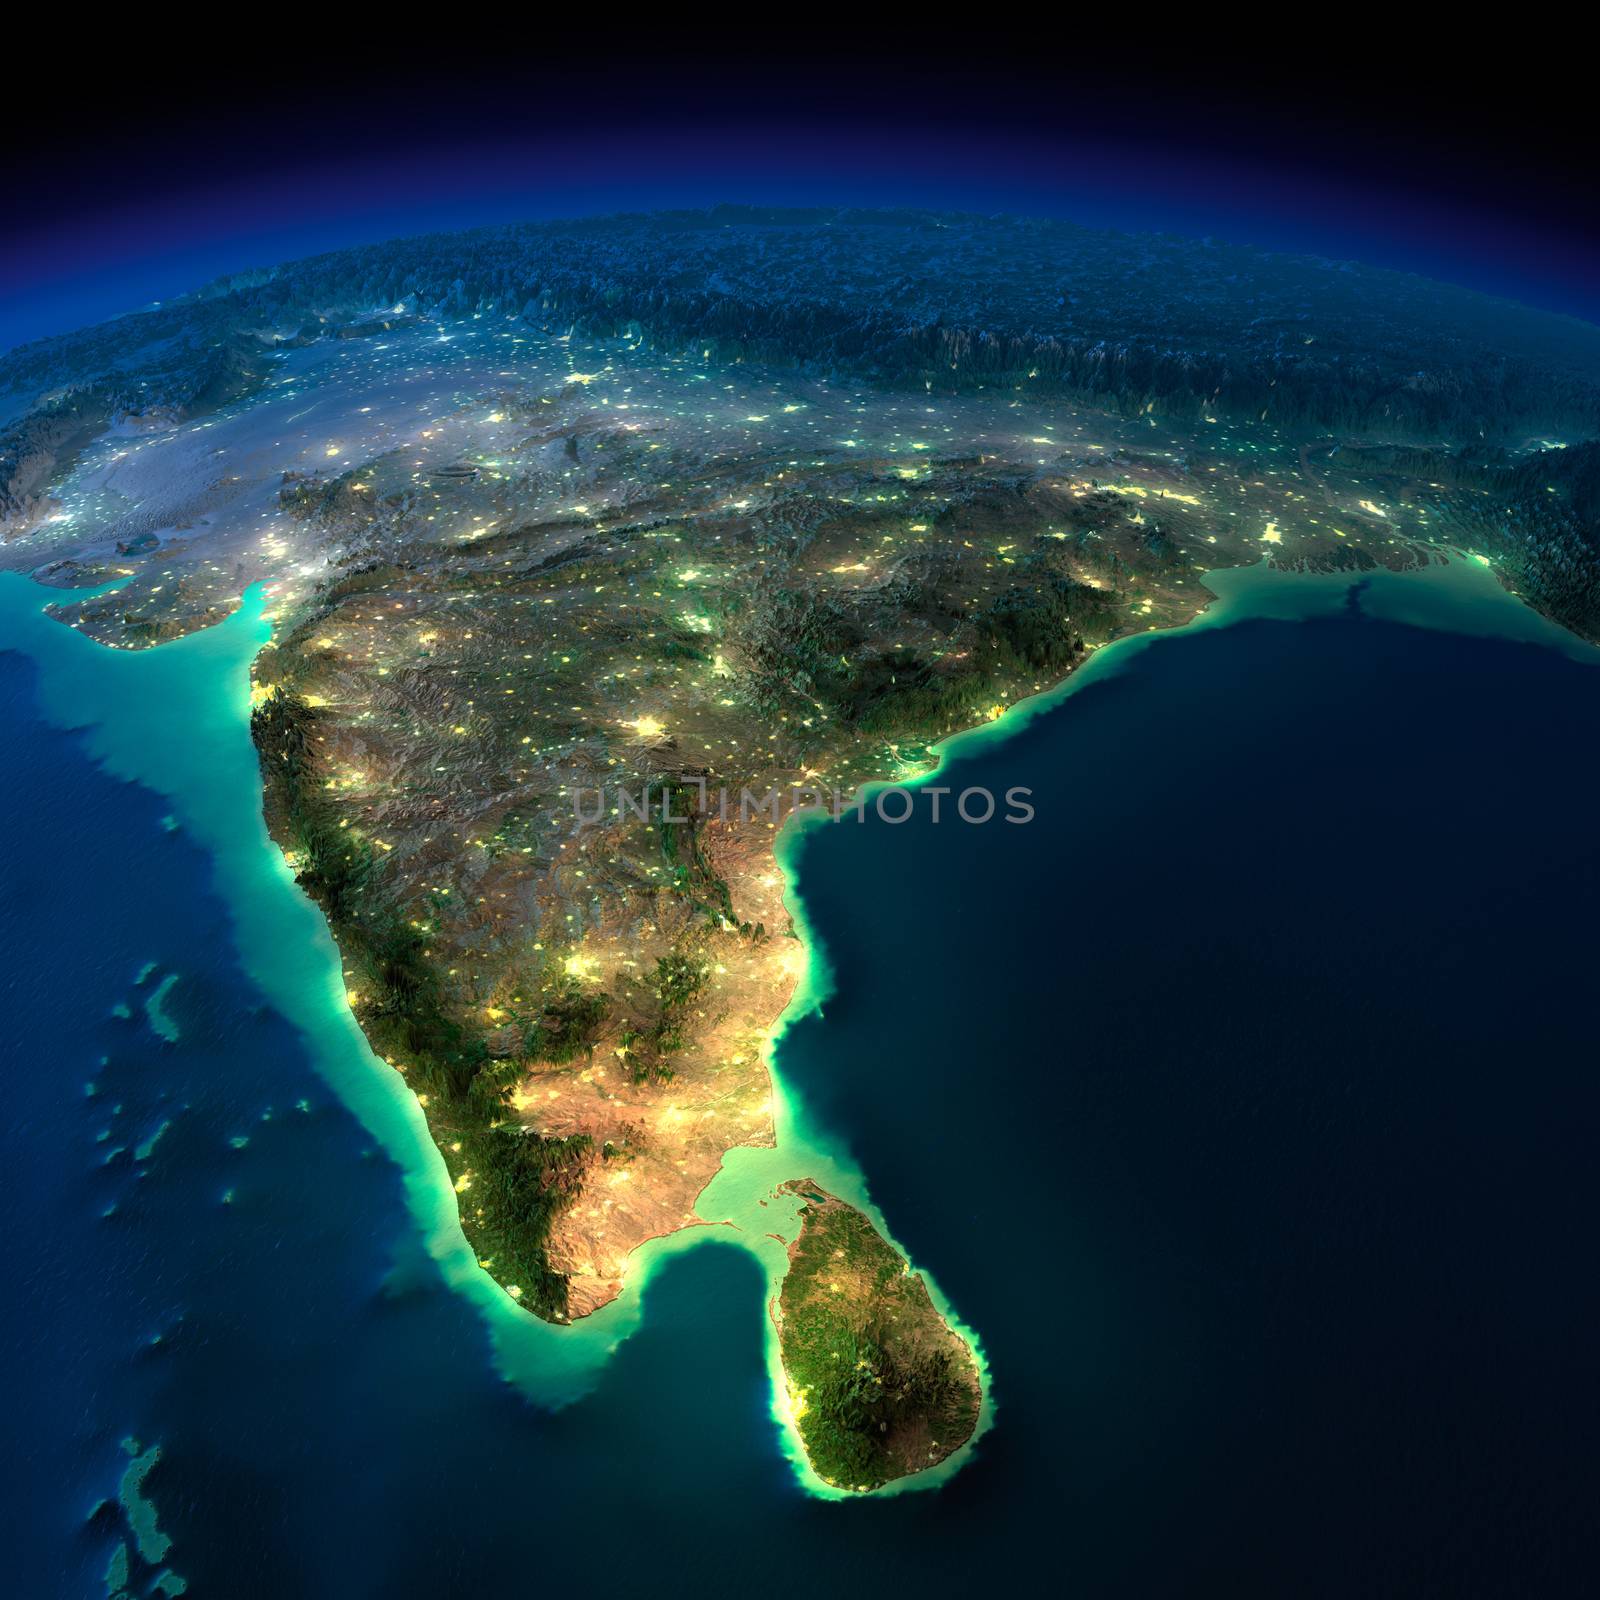 Night Earth. India and Sri Lanka by Antartis